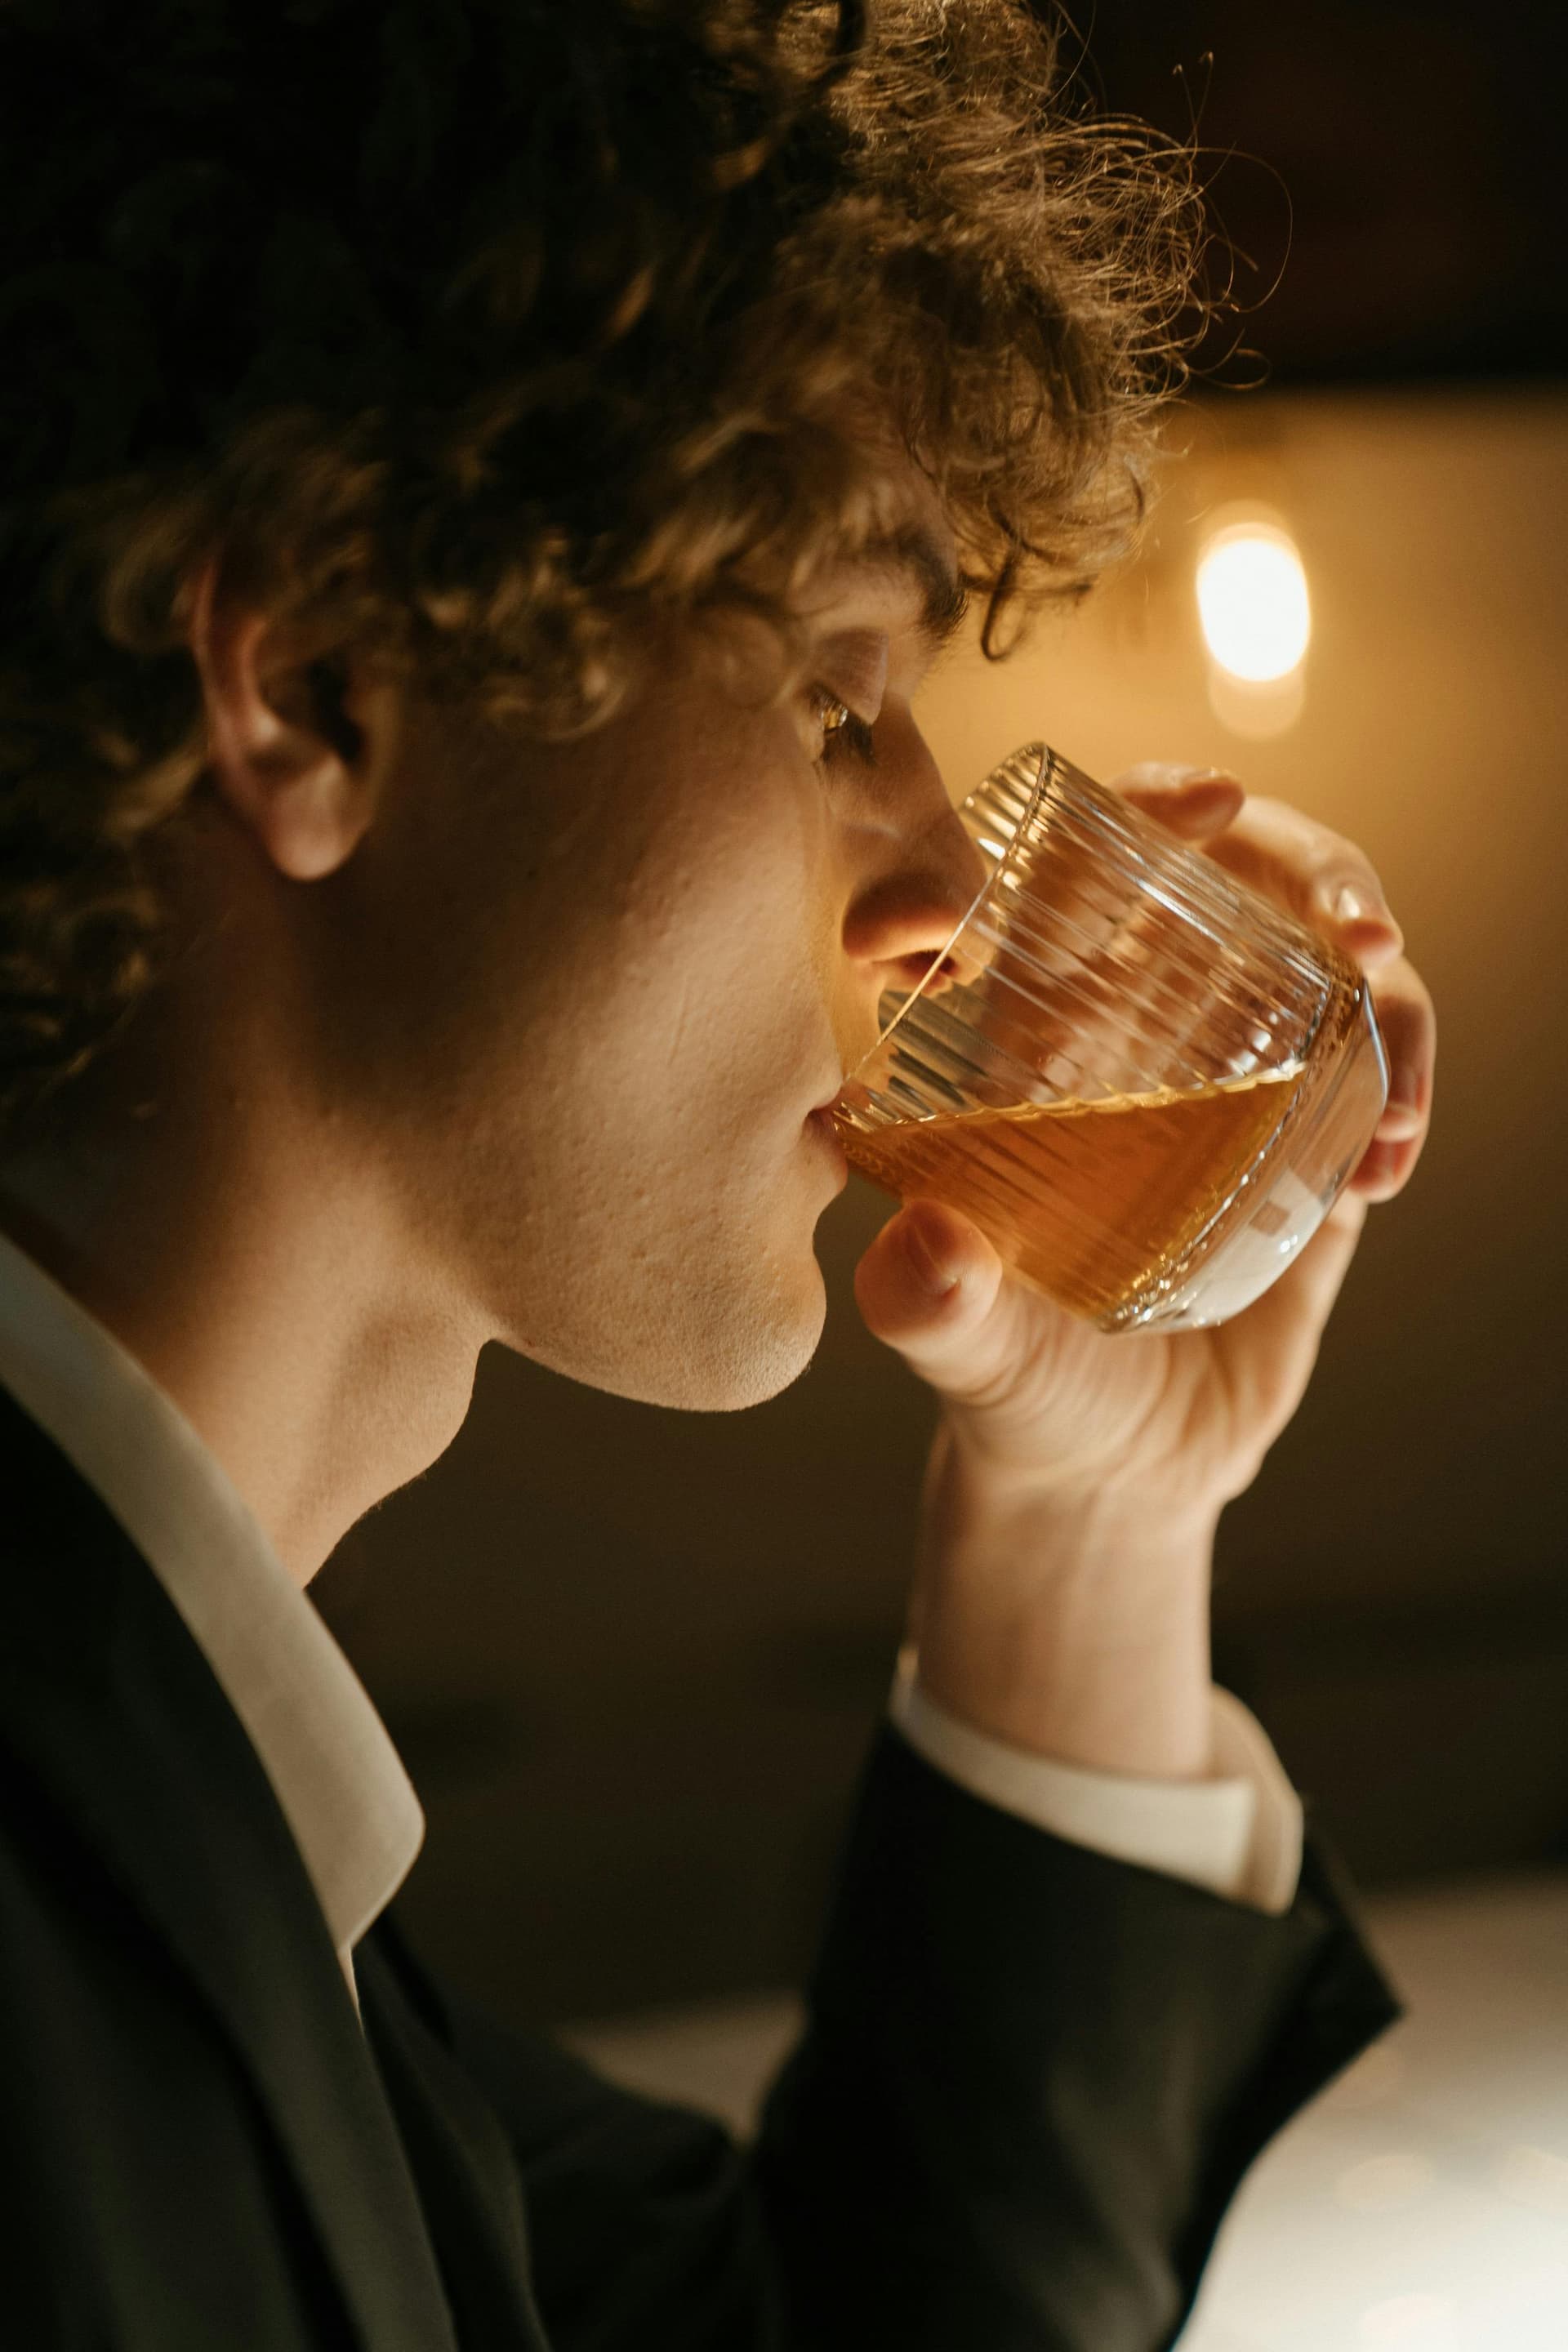 Newer Manners, Art of Conversation: An Updated Gentleman’s Guide To Drinking Etiquette